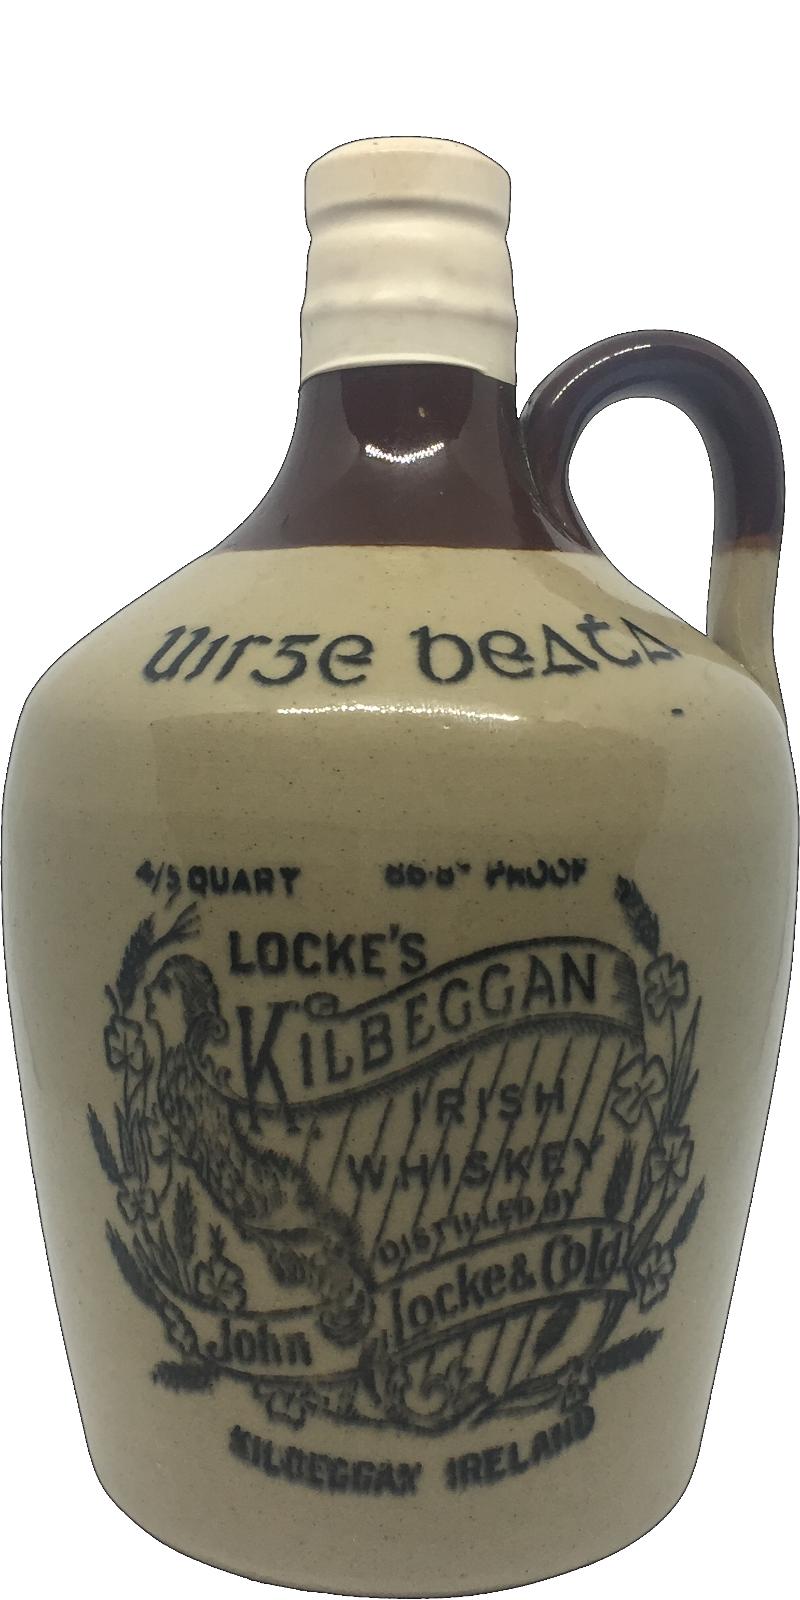 Locke's Kilbeggan Irish Whiskey - Value and price information - Whiskystats